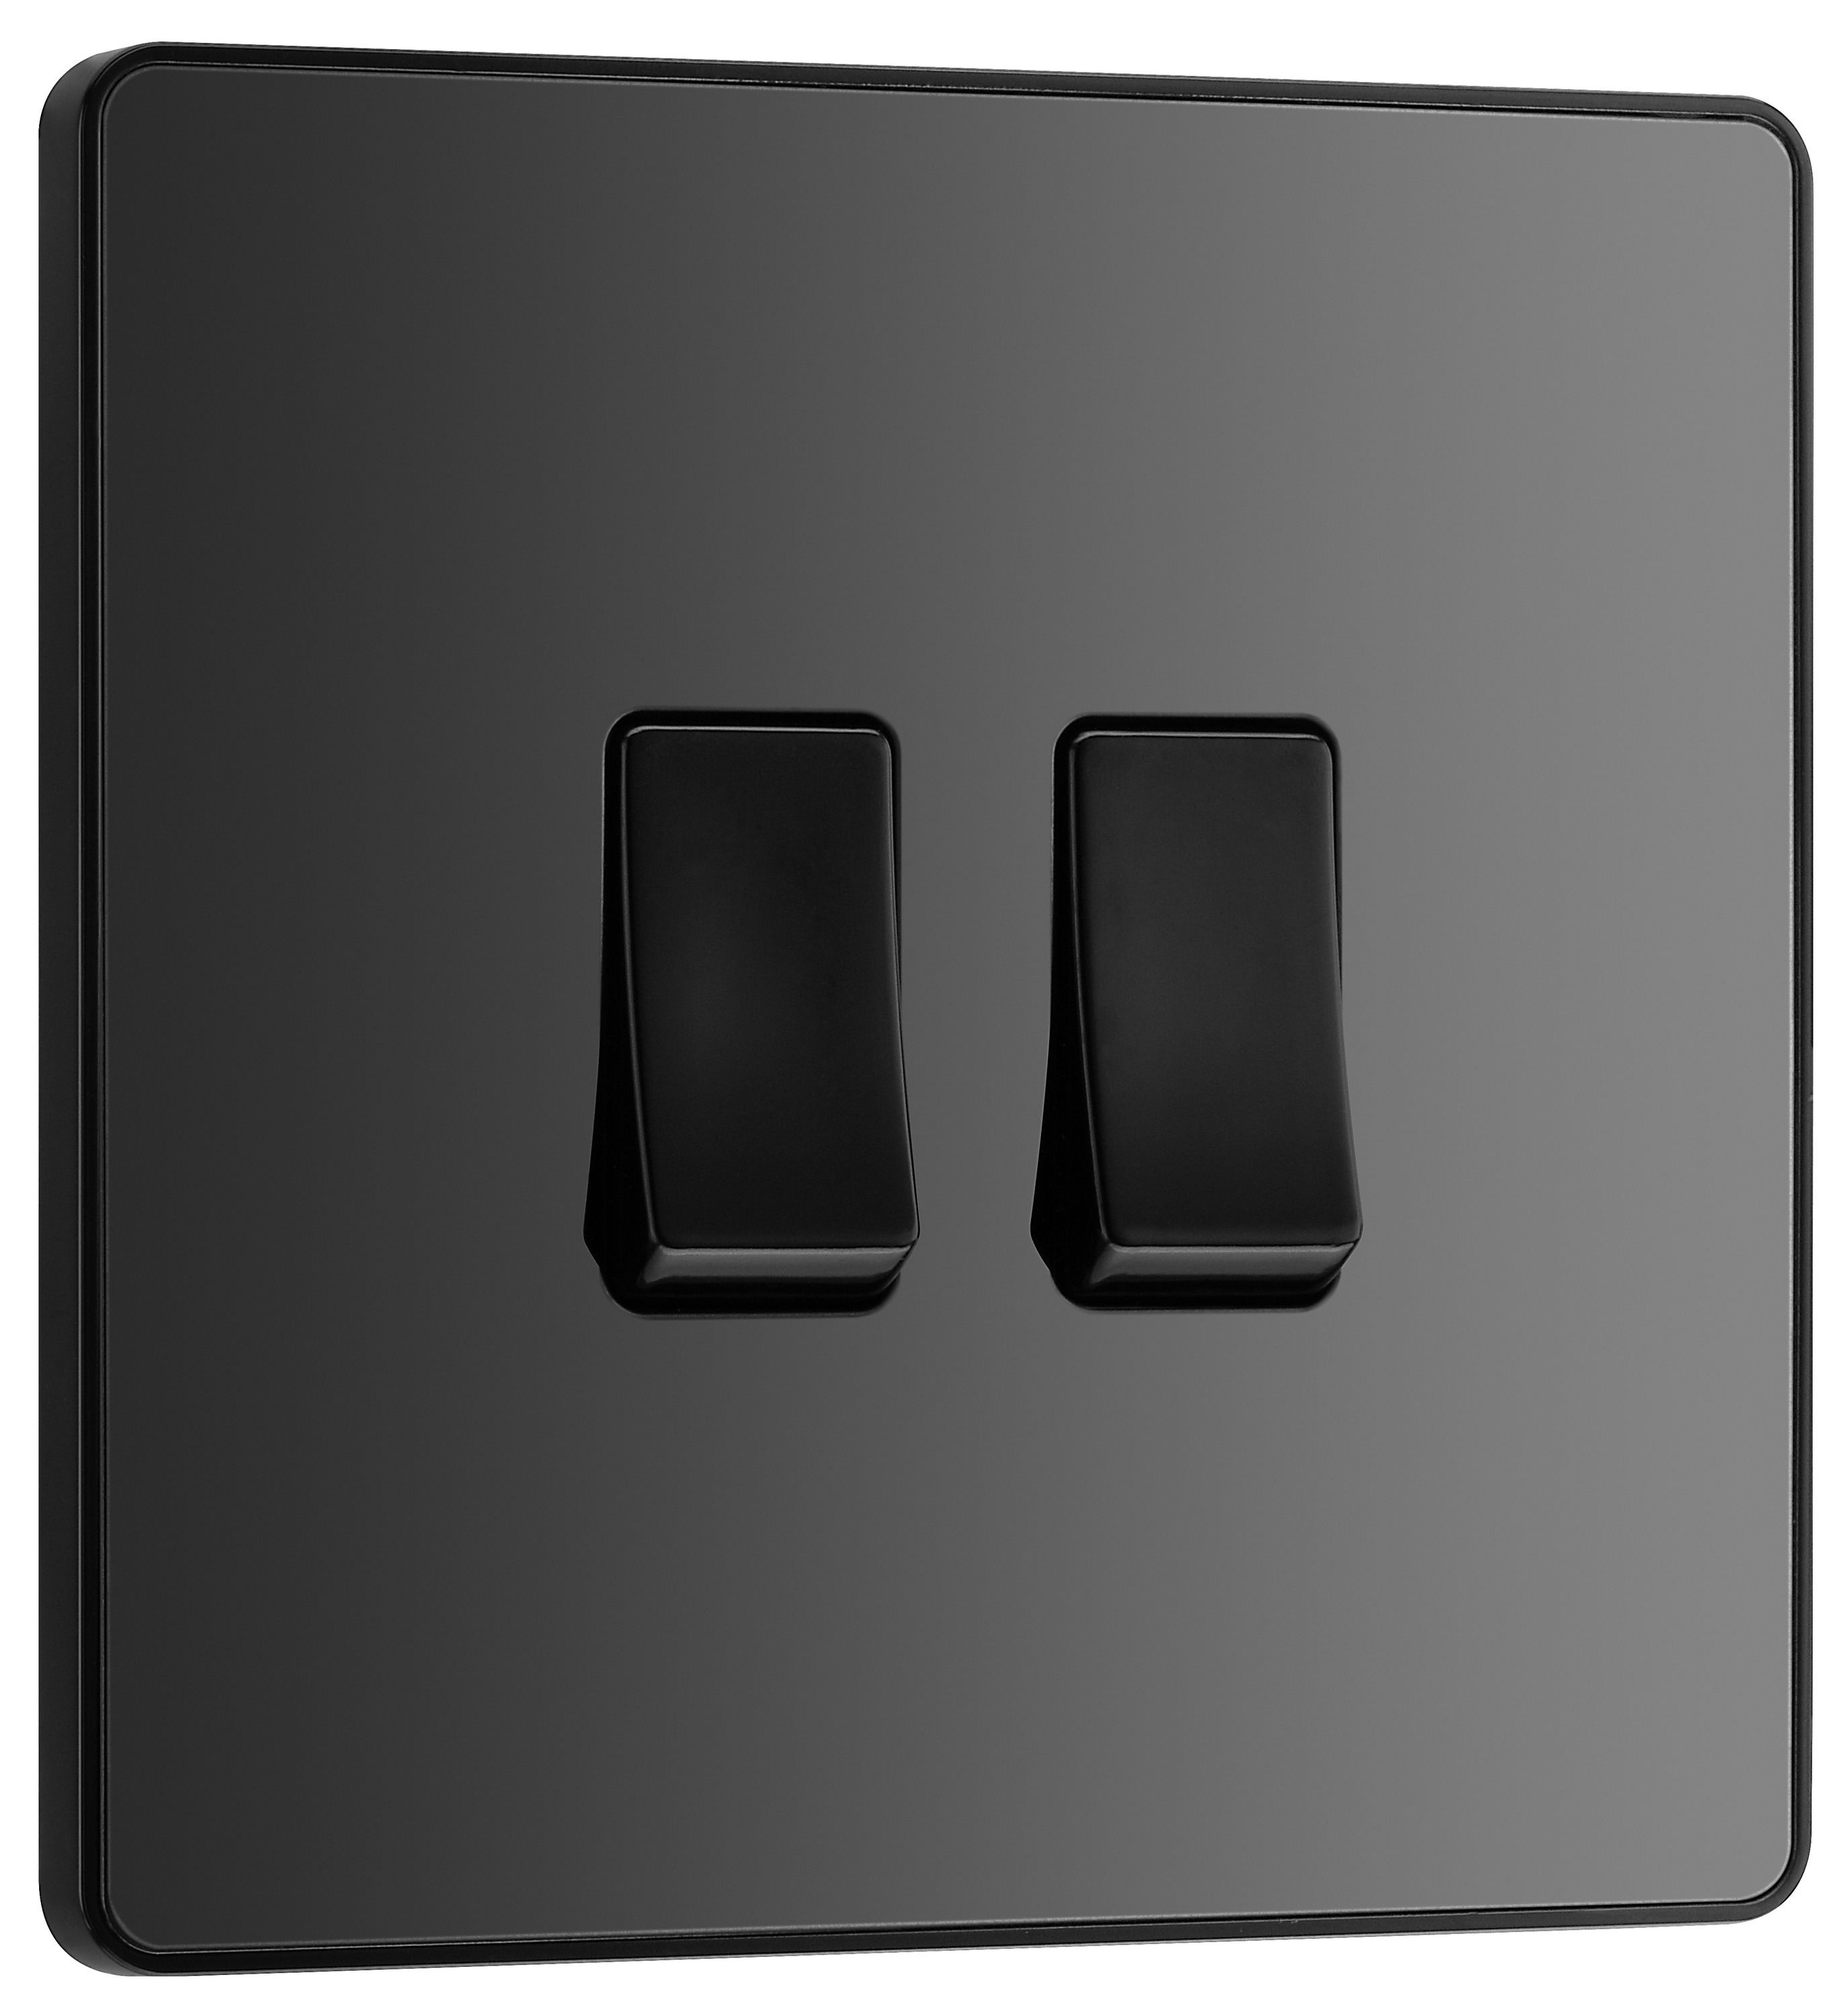 Image of BG Evolve Black Chrome 20A 16Ax Double Light Switch - 2 Way